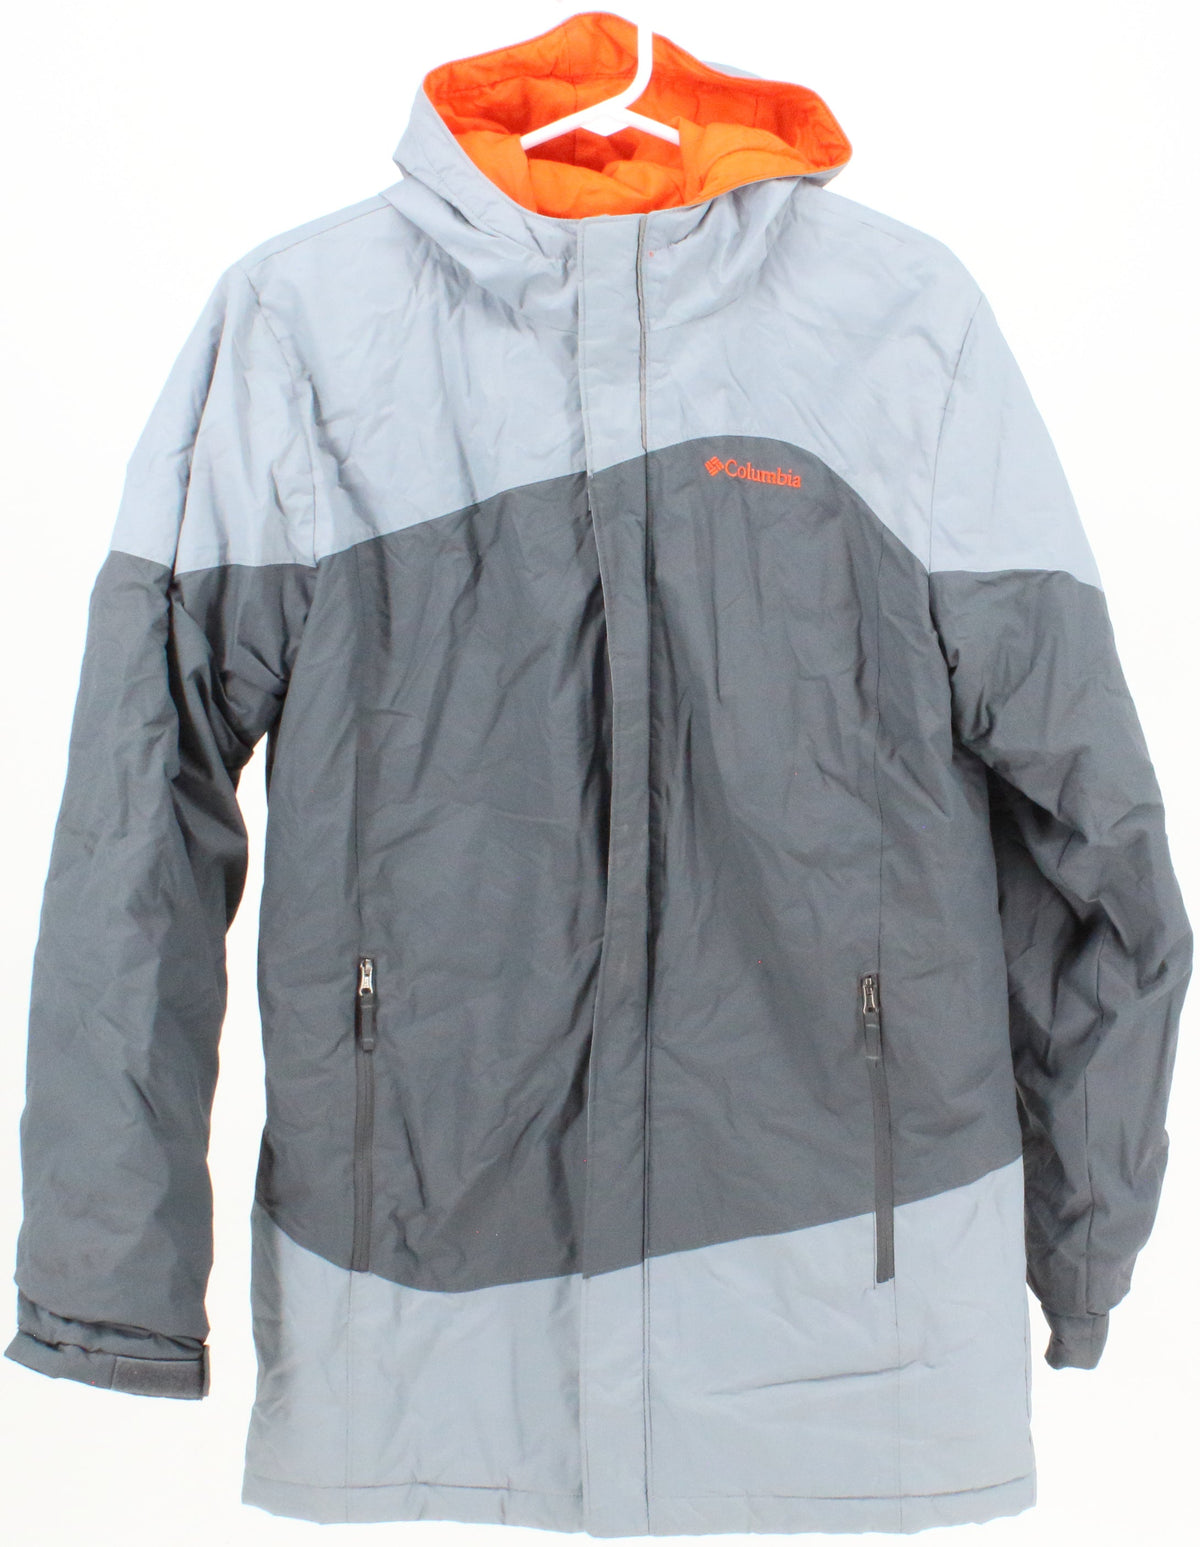 Columbia Men's Grey and Orange Insulated Jacket